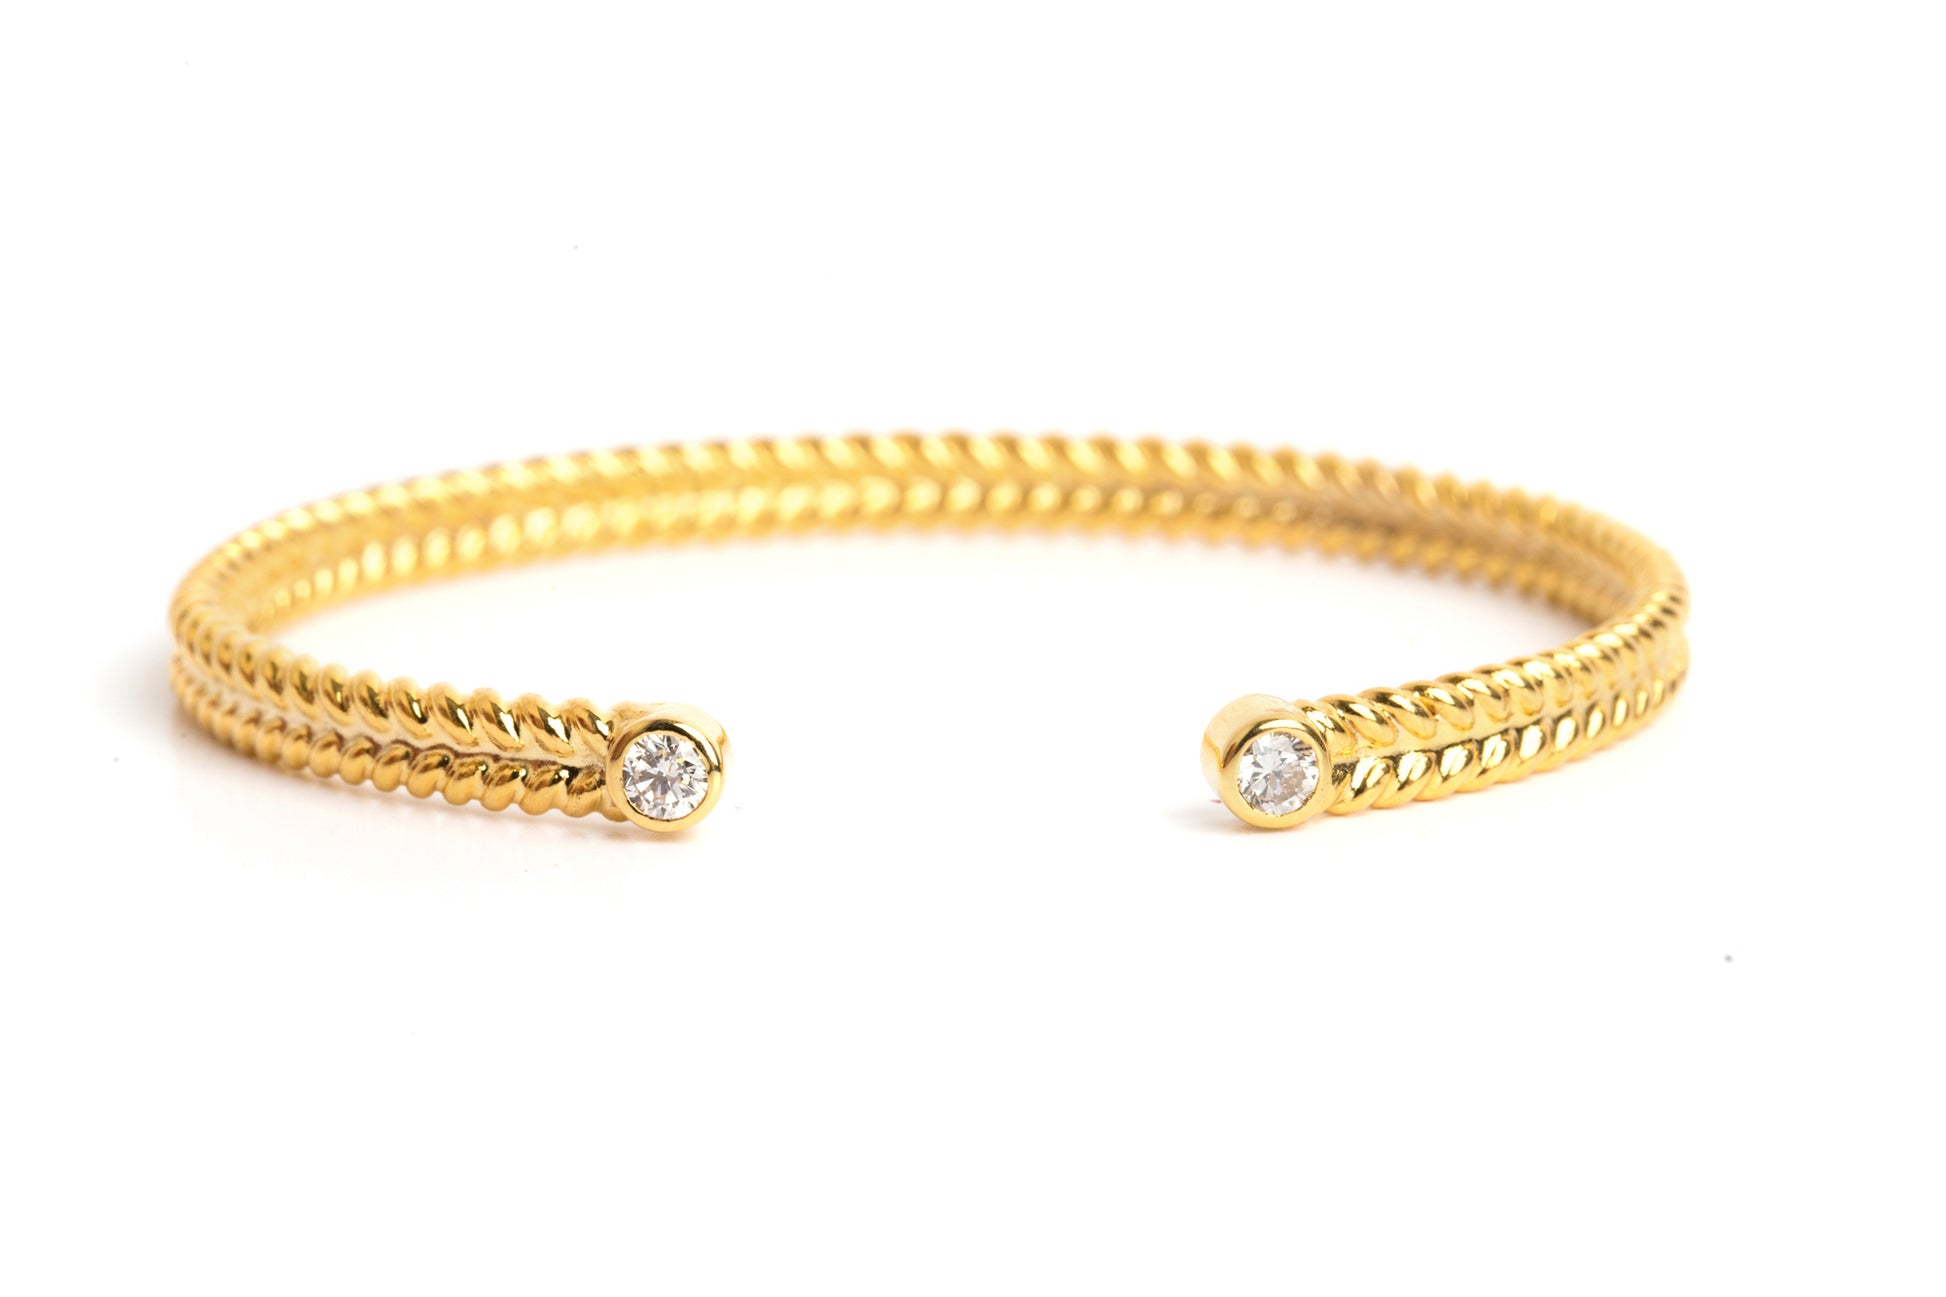 jadela yellow gold bracelet with diamonds